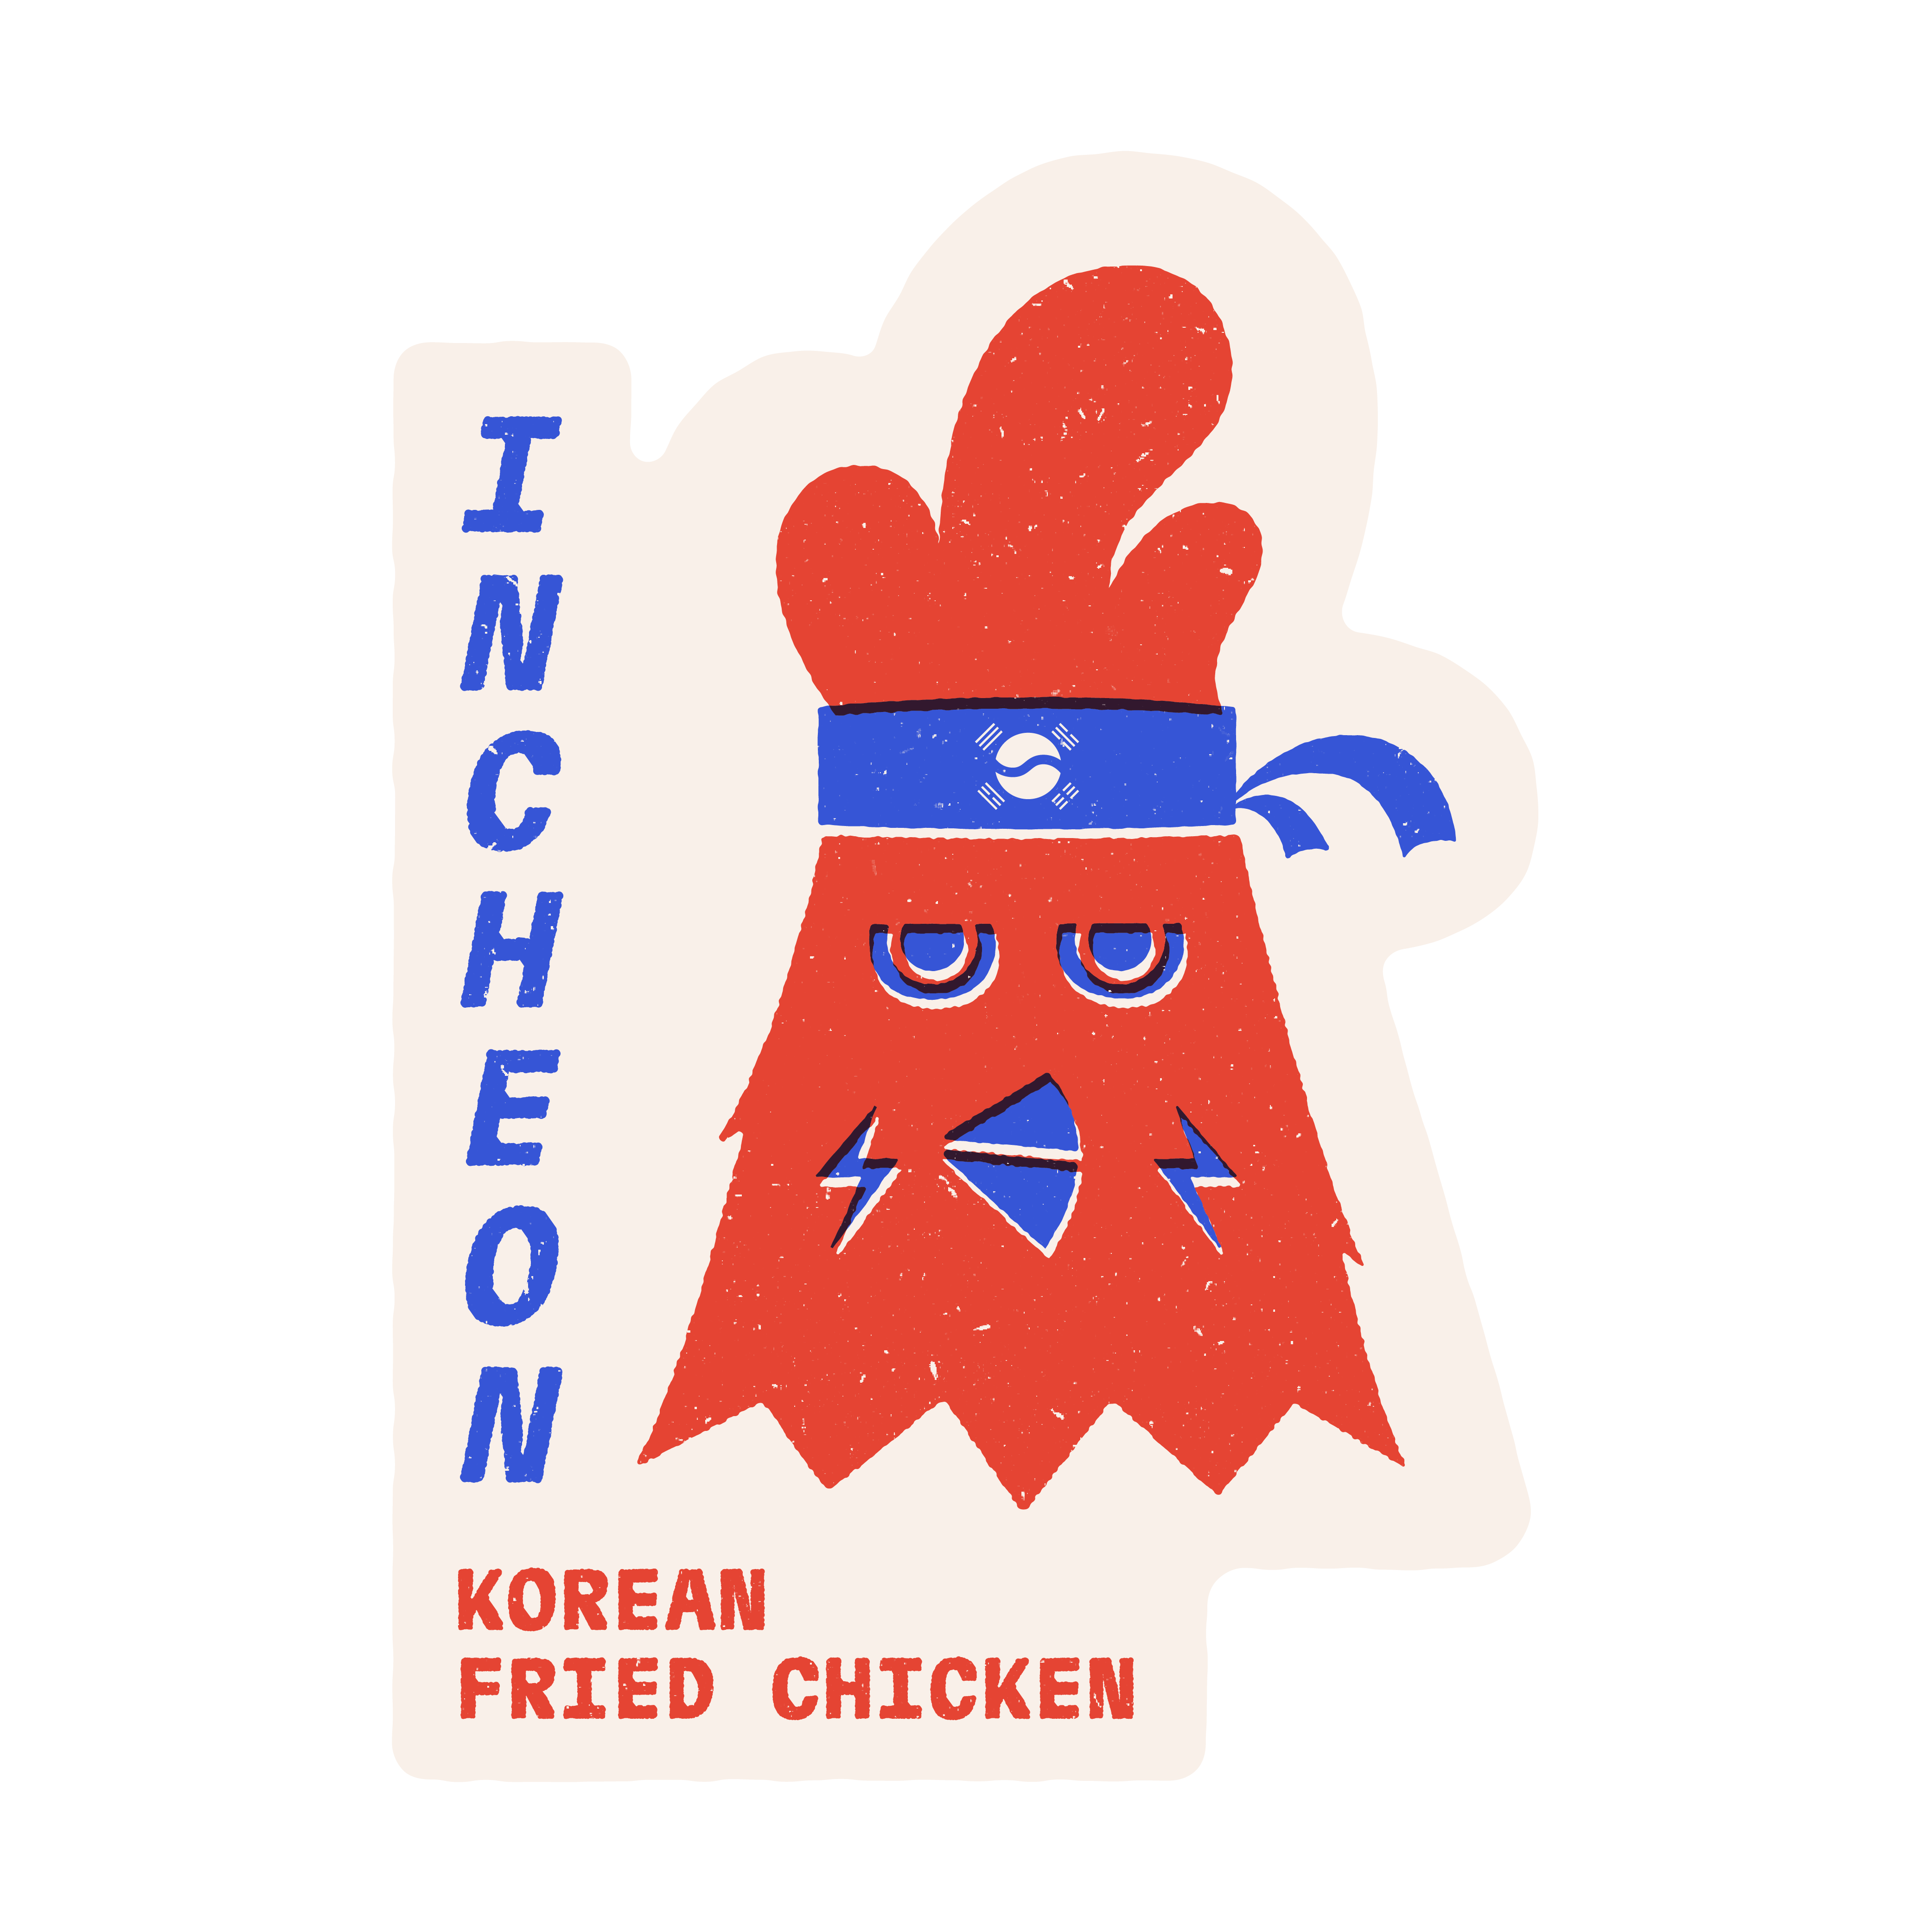 Incheon logo